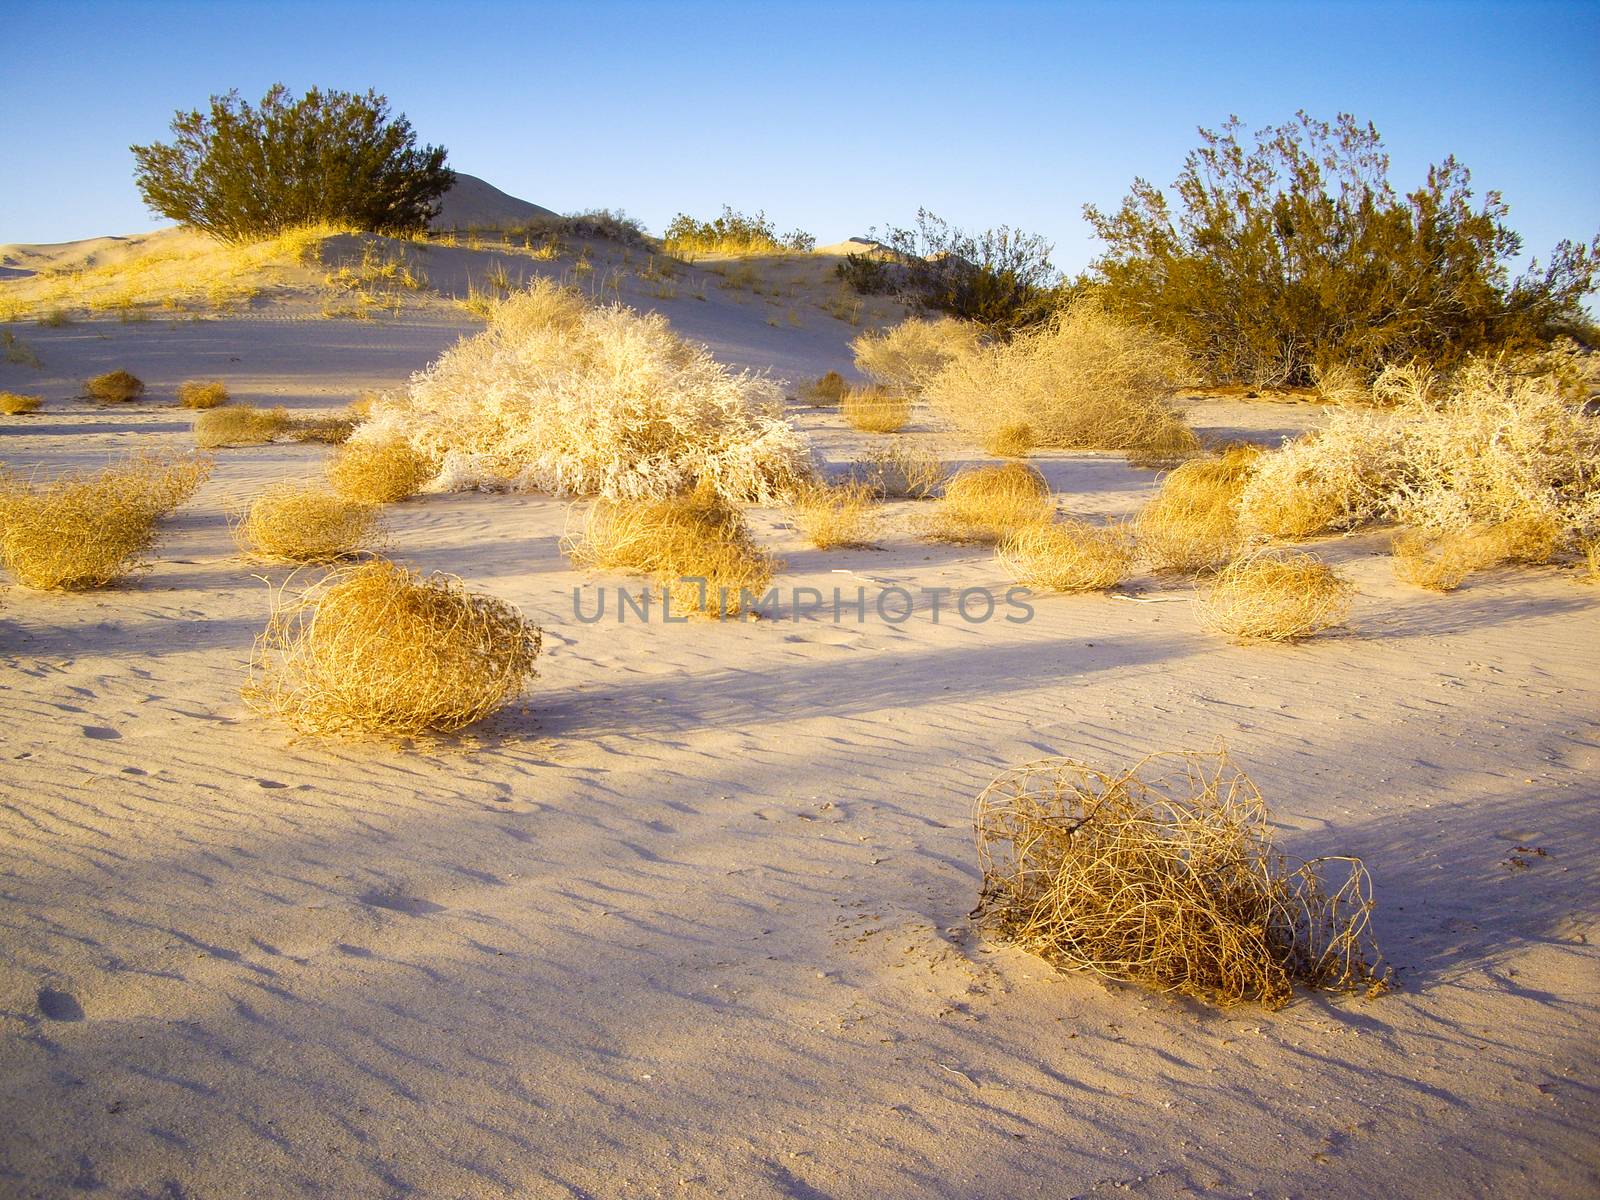 Tumbleweeds of Mojave Desert by emattil